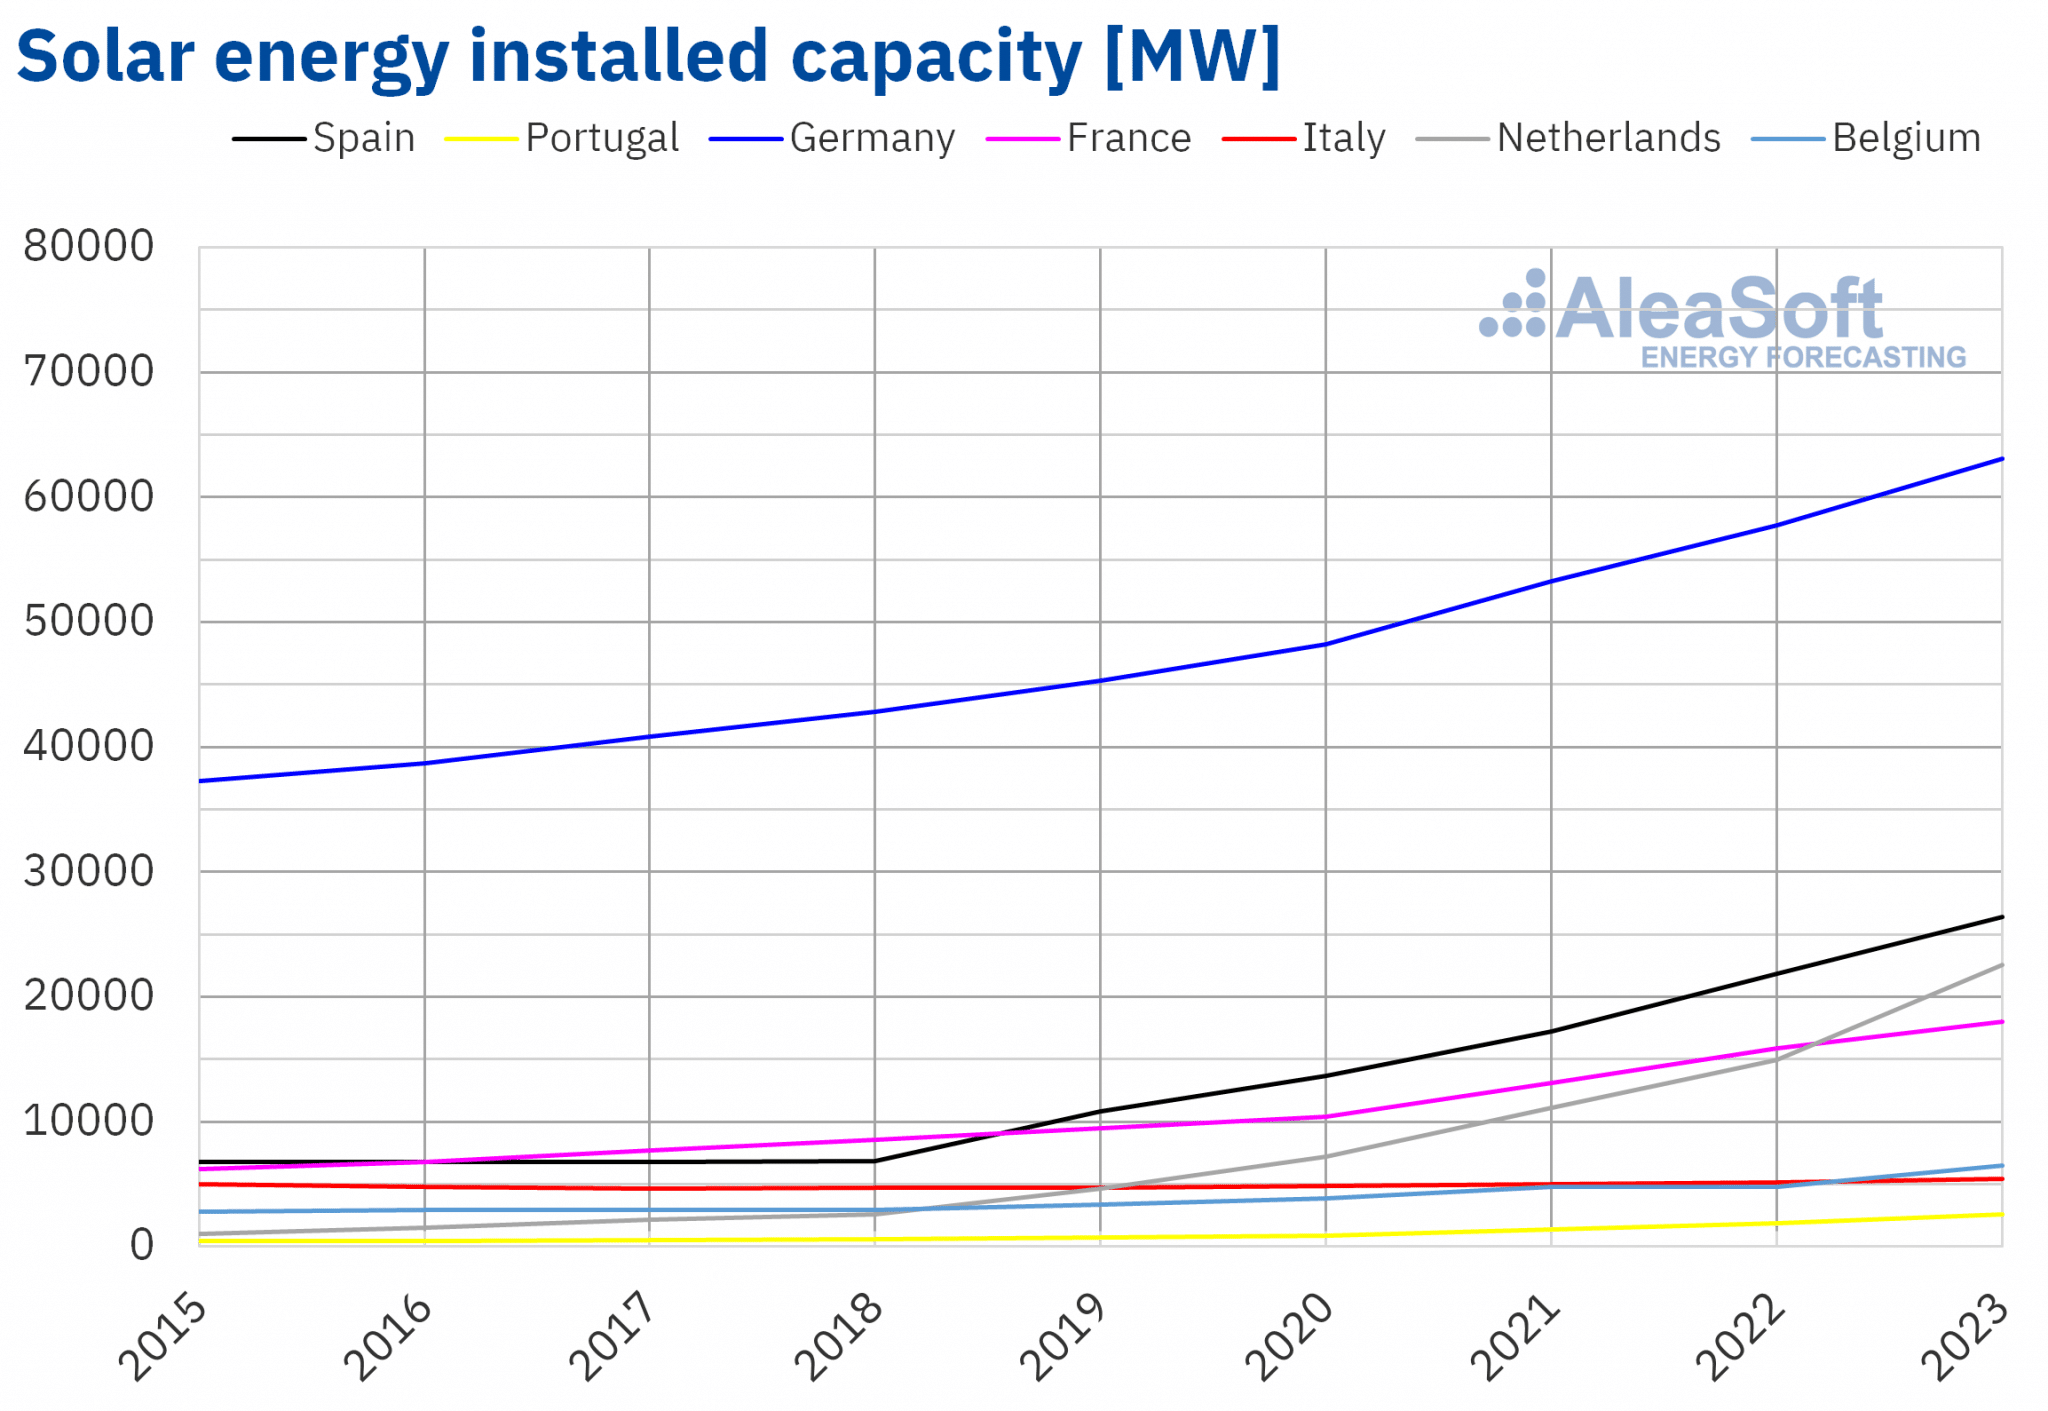 AleaSoft - solar energy installed capacity